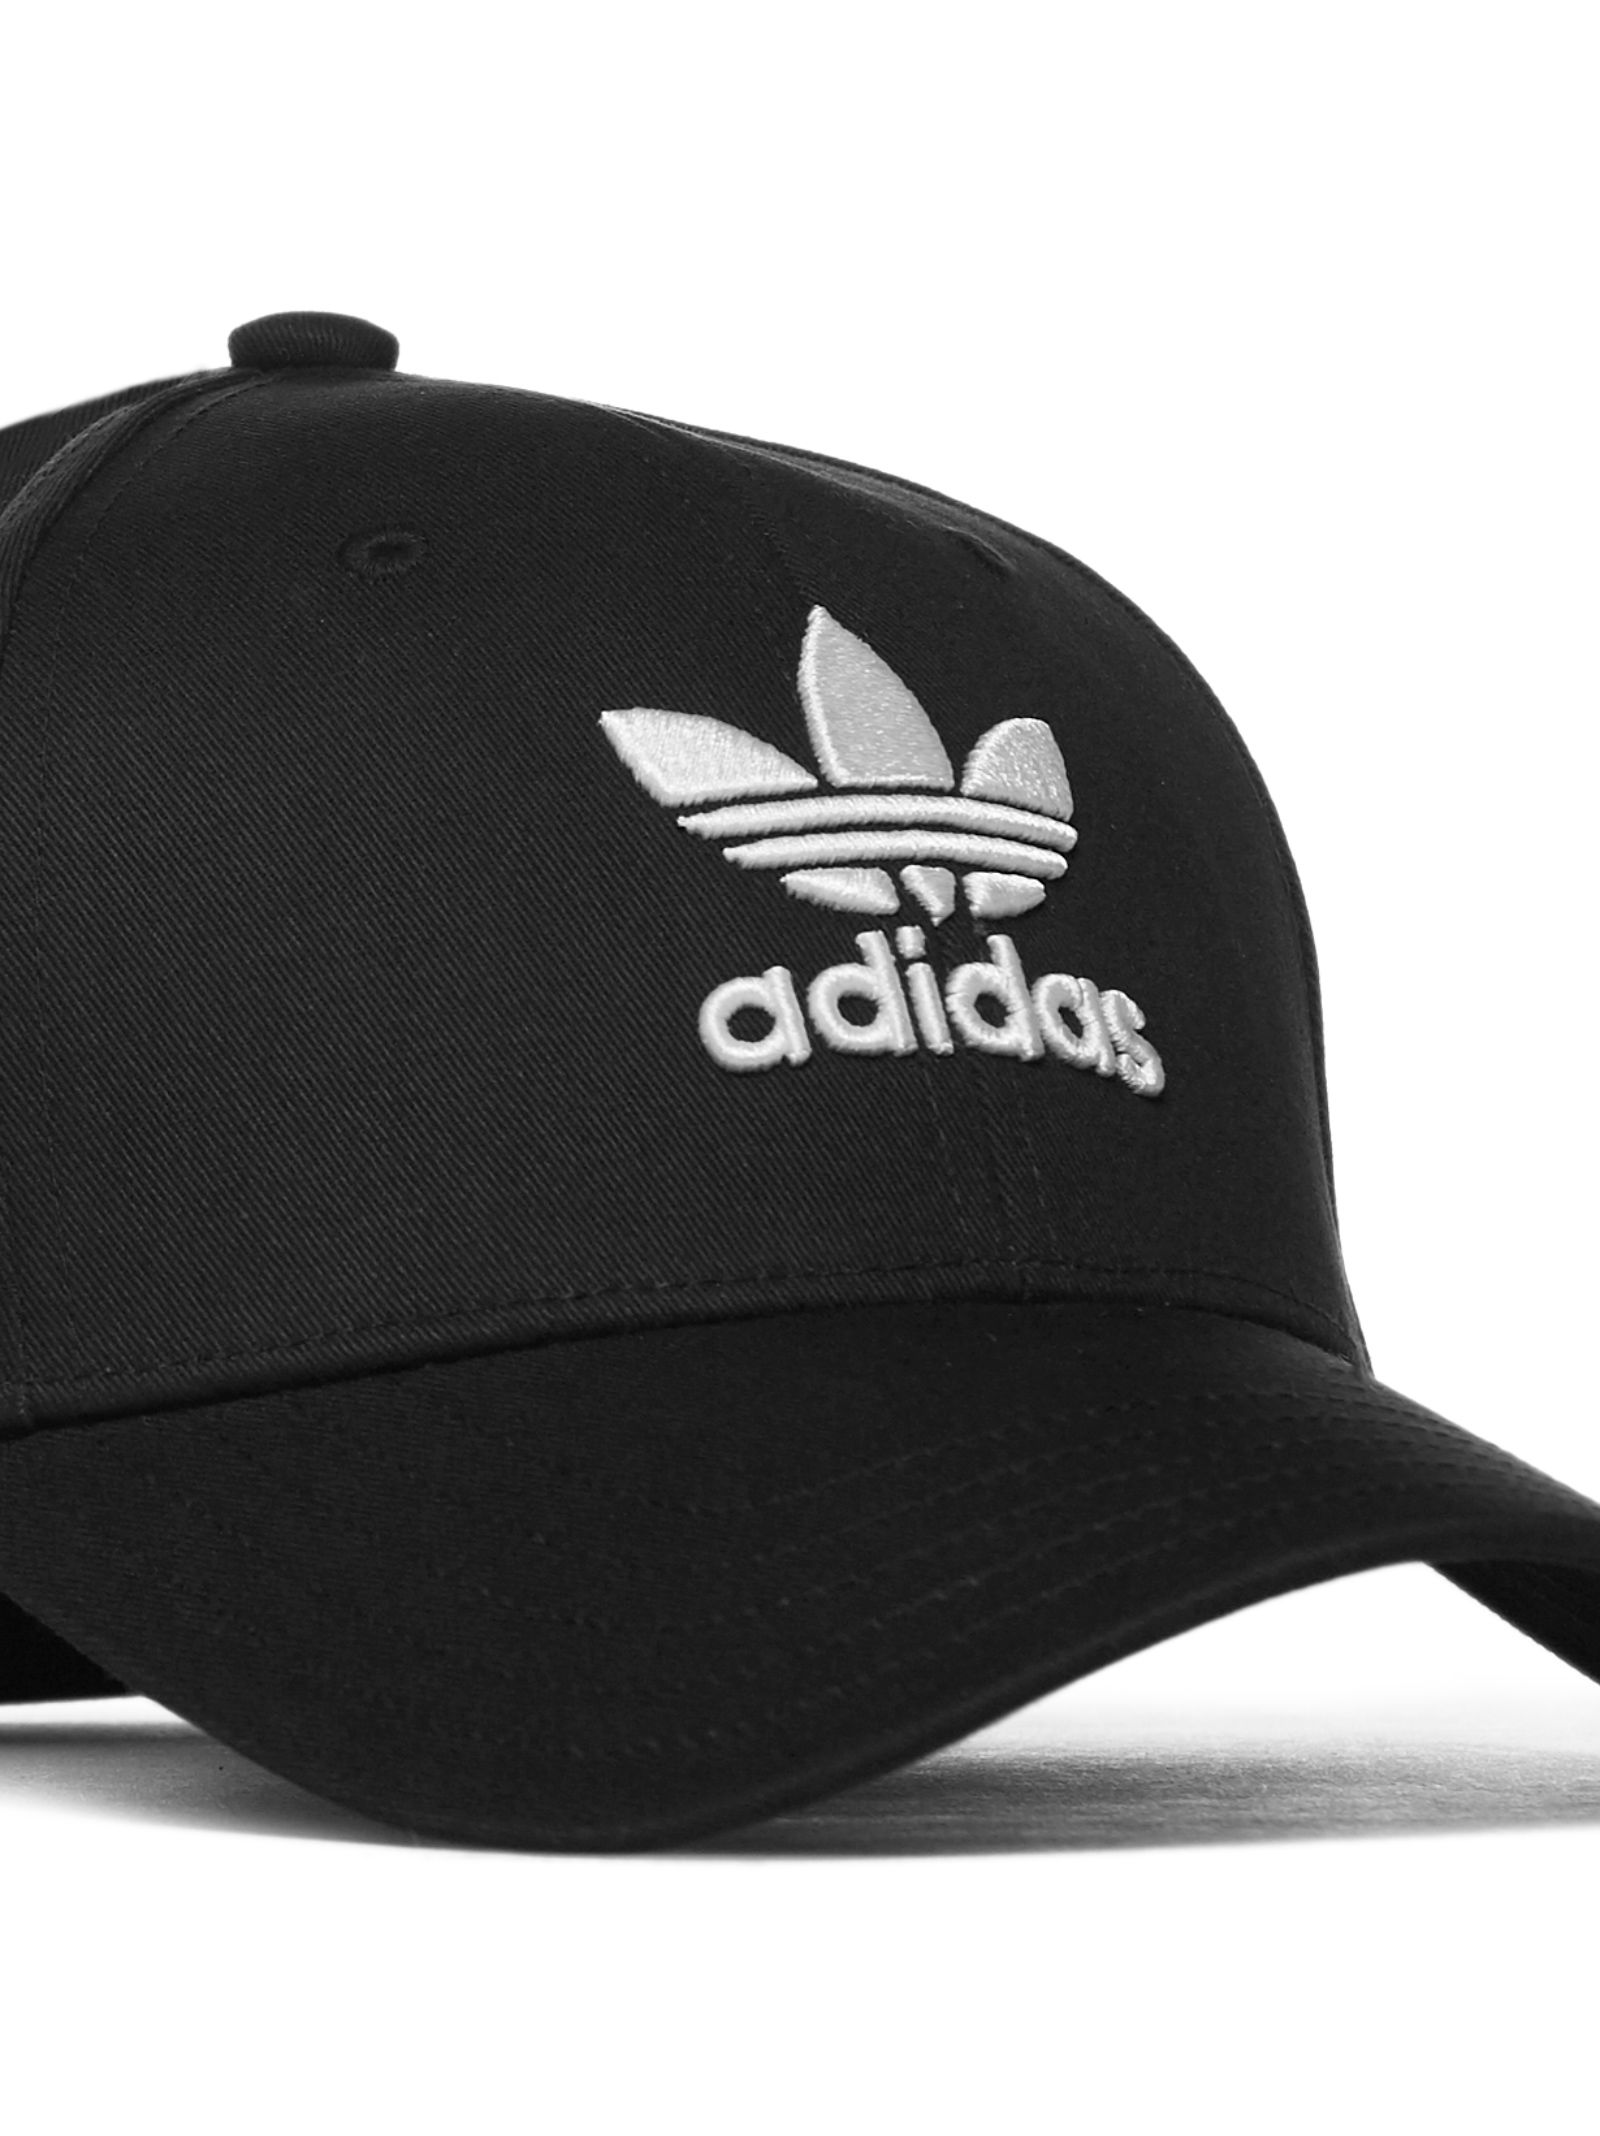 Adidas Originals Adidas Originals Embroidered Logo Cap - Black ...